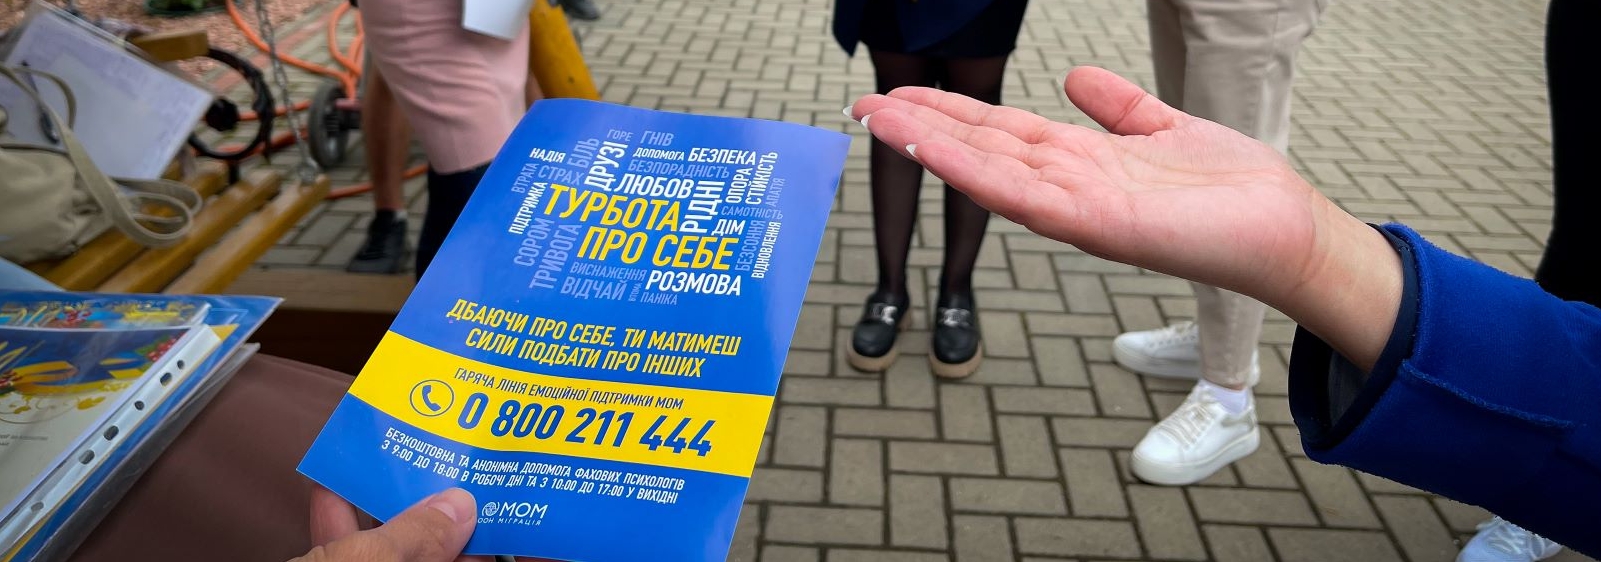 IOM mental health and psychosocial support hotline in Ukraine. © IOM 2022 / Gemma Cortes